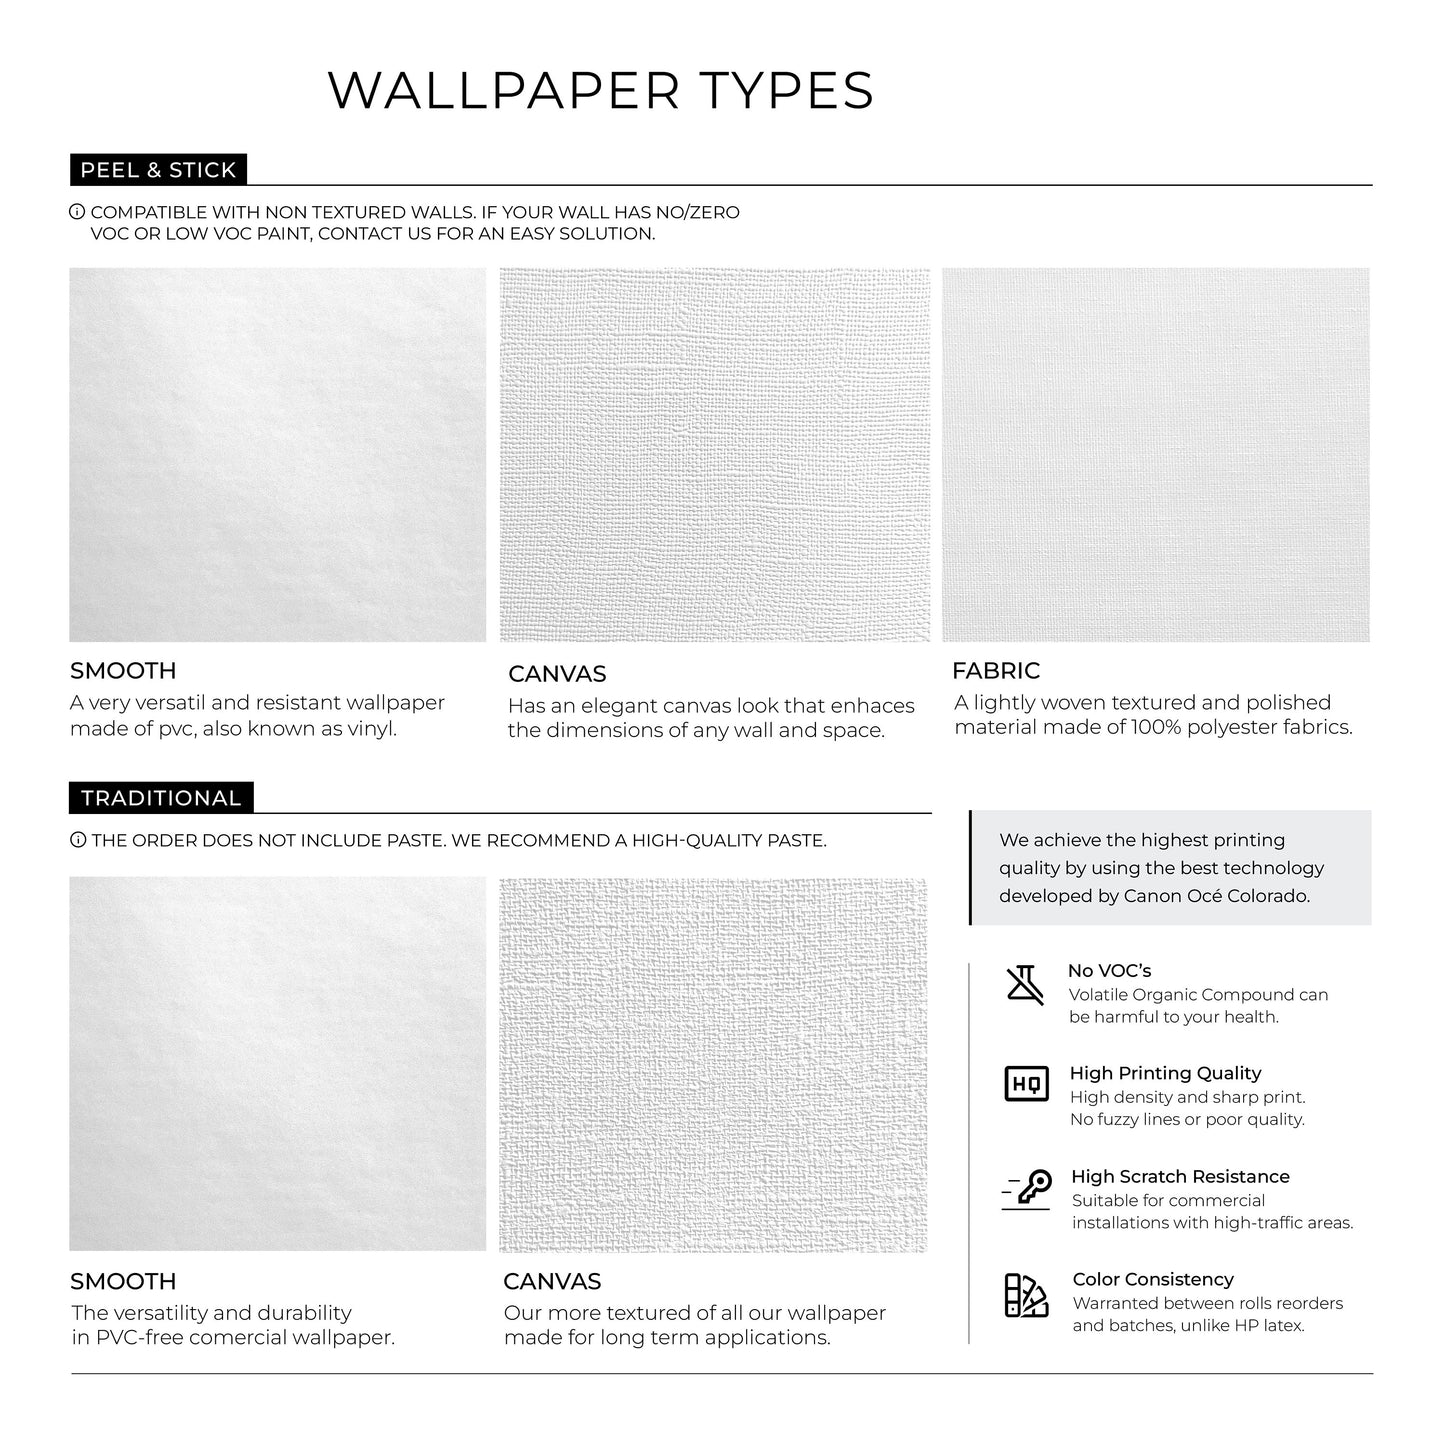 Removable Wallpaper Temporary Wallpaper Eclectic Wallpaper Peel and Stick Wallpaper Wall Paper - A865